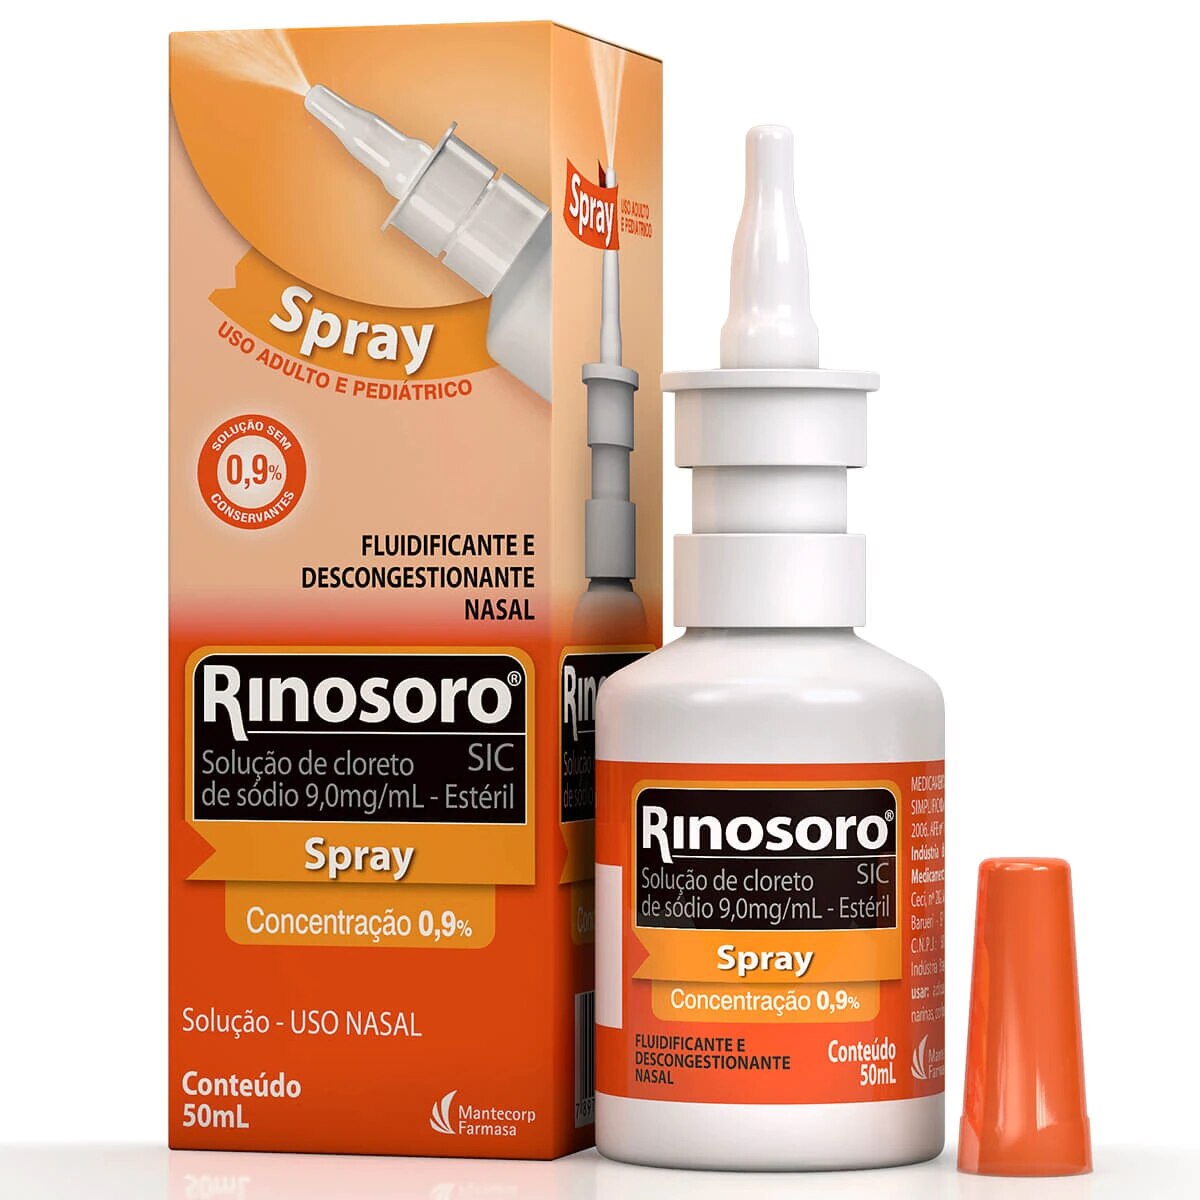 Rinosoro Sic 0,9% Descongestionante Spray Nasal 50ml